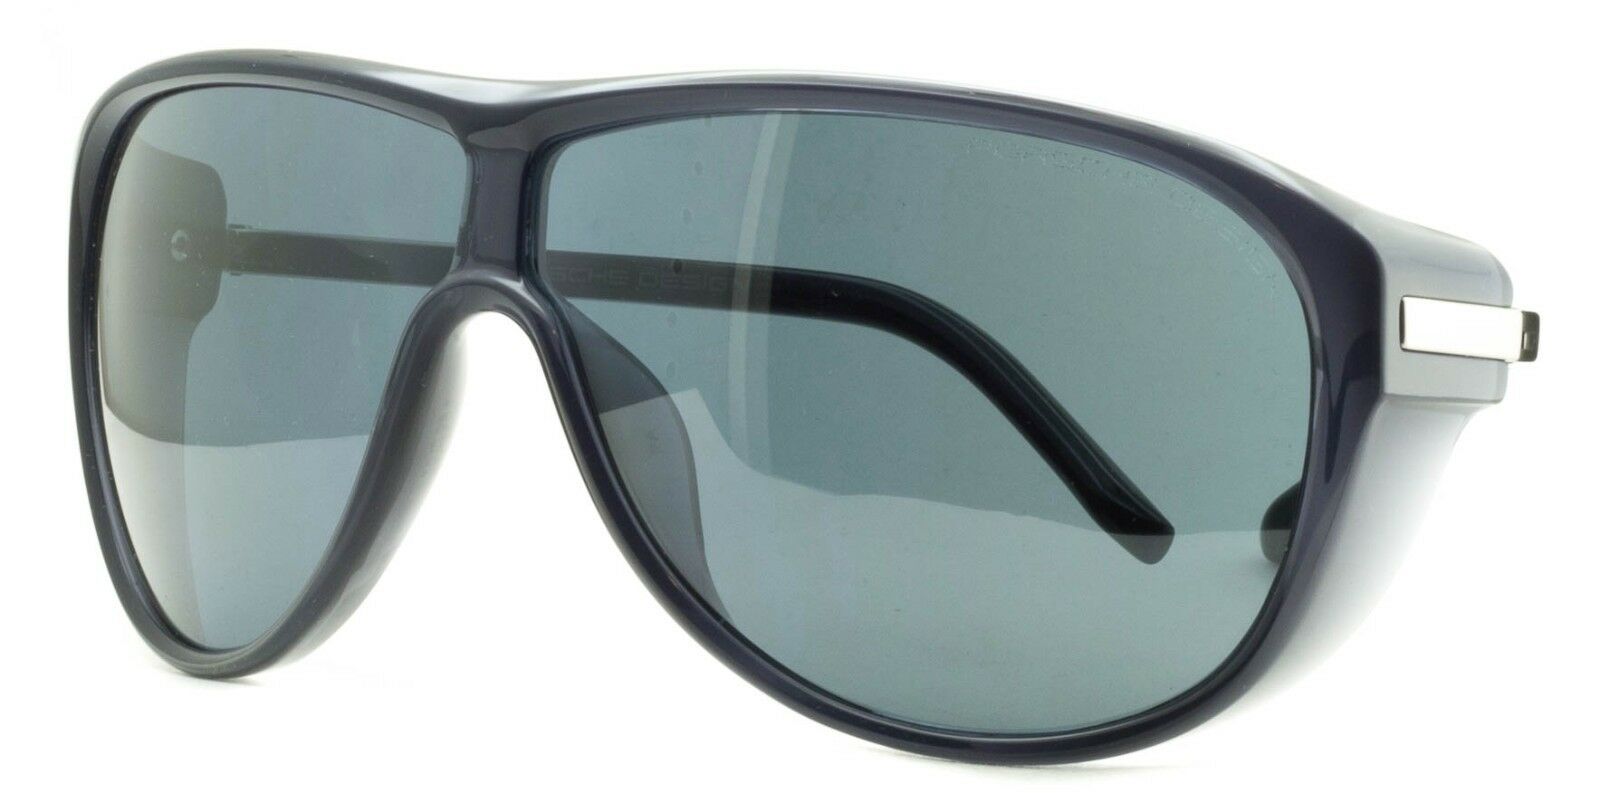 PORSCHE DESIGN P 8598 A Cat. 3 SUNGLASSES FRAMES Glasses Shades - New - GGV Eyewear